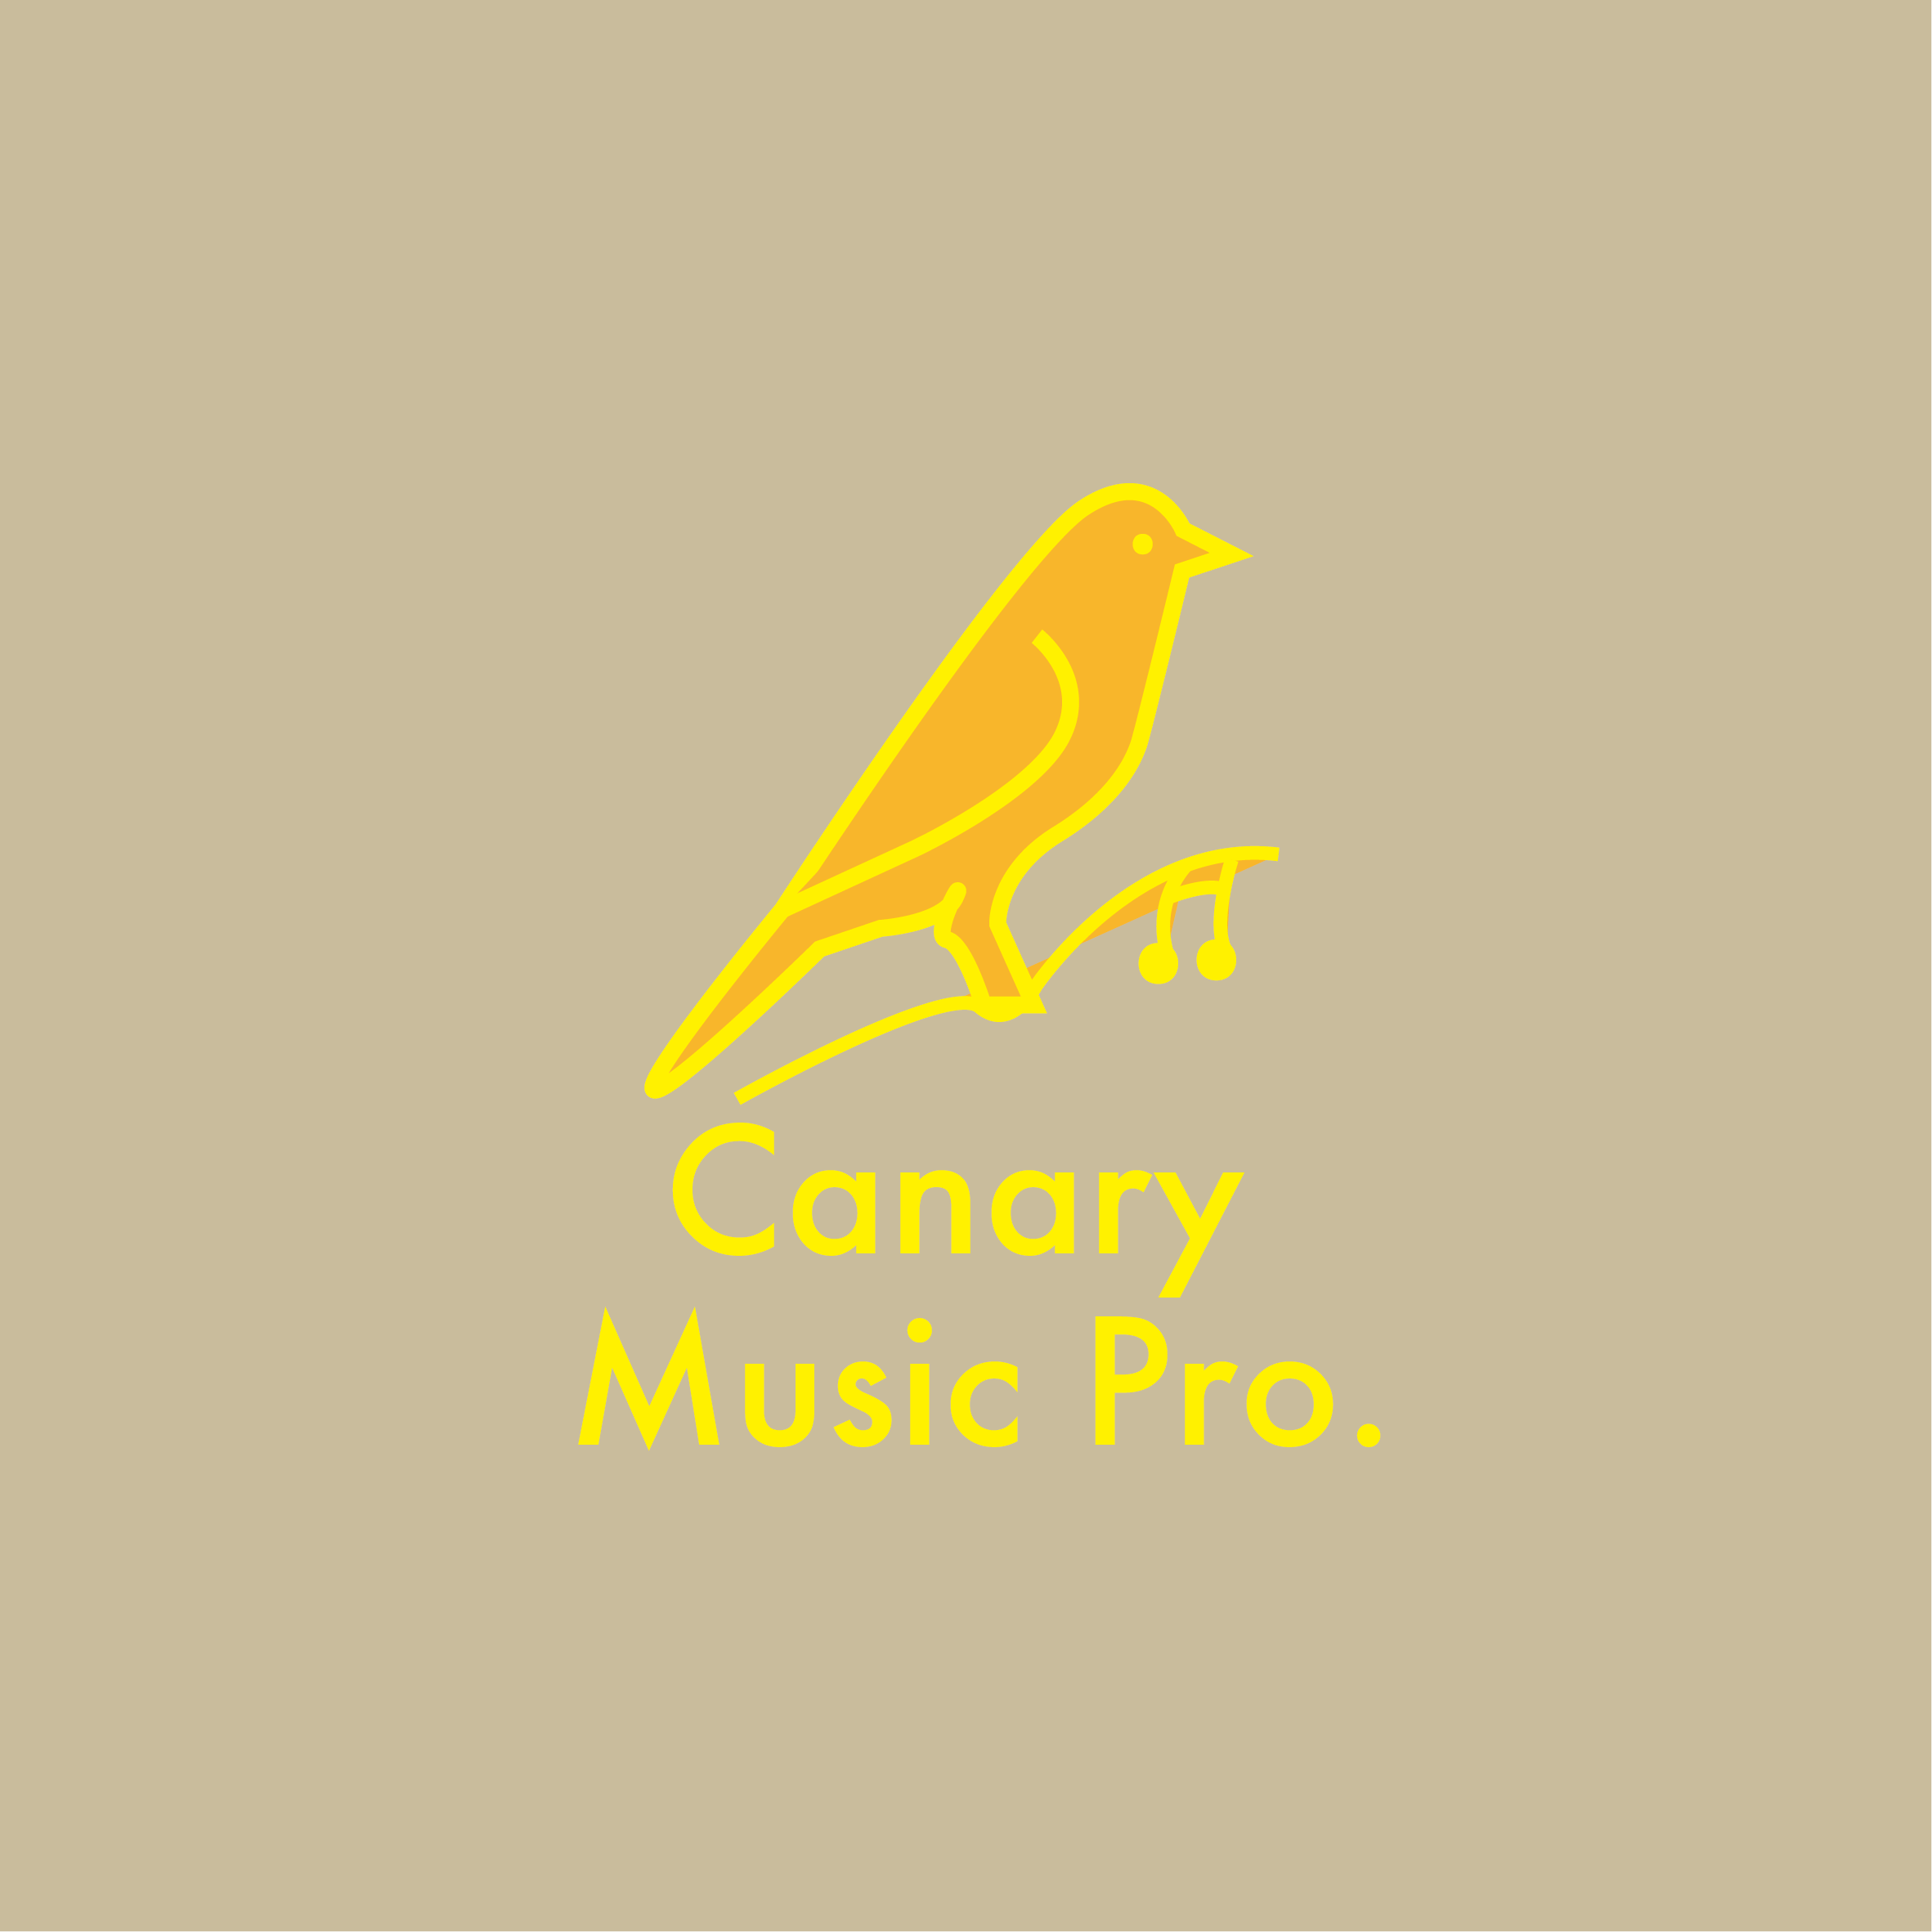 Canary Music Pro.